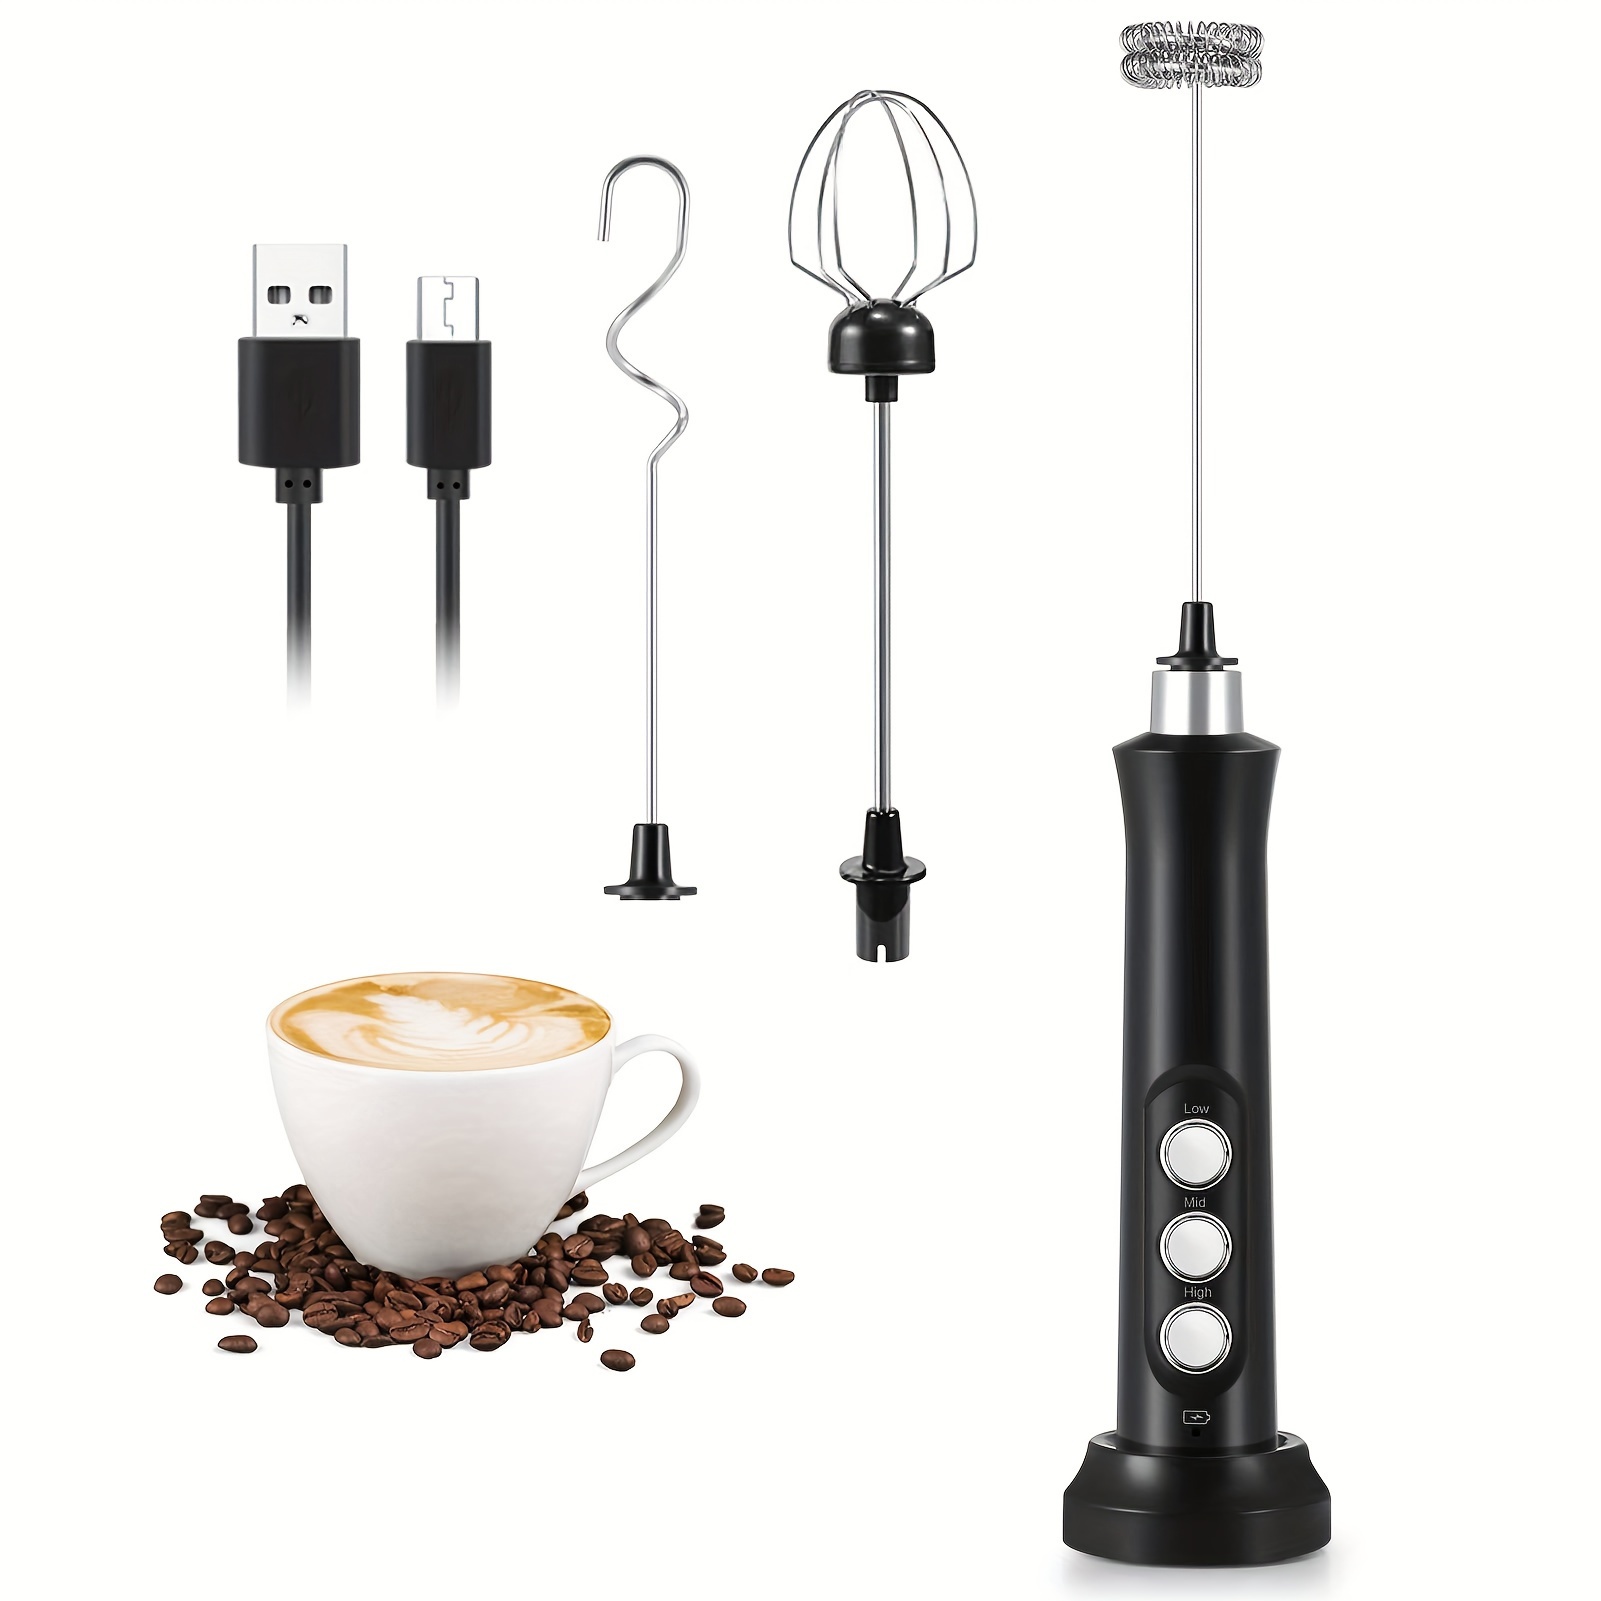  XIMU Espumador de leche de mano, recargable por USB, 3  velocidades, mini mezclador eléctrico de espuma de leche para café, latte,  capuchino, chocolate caliente, batidor de huevo y soporte de acero